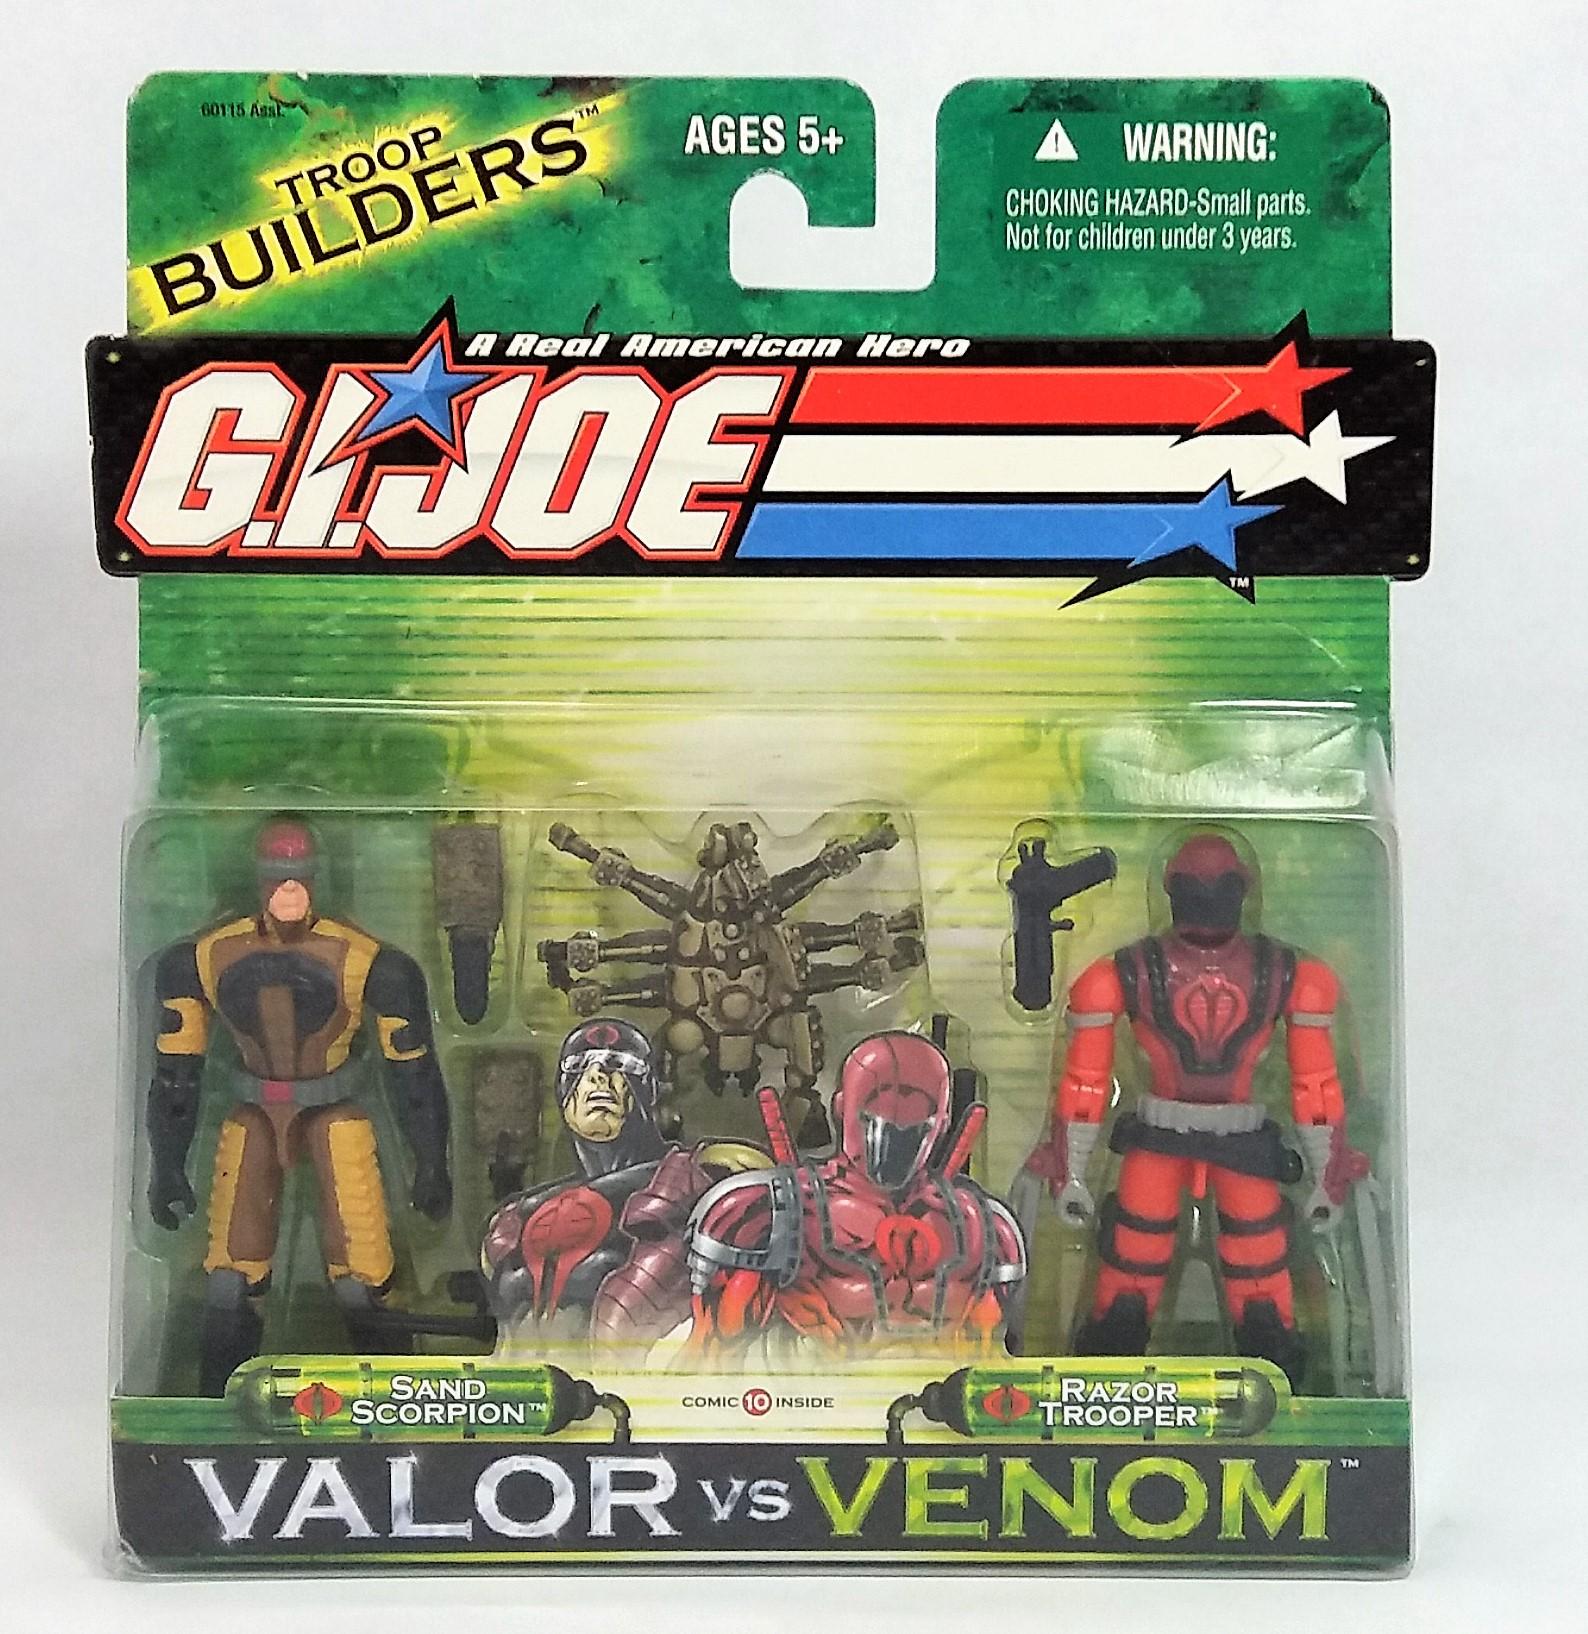 Sand Scorpion Vs Razor Trooper G.I. Joe Valor Vs Venom 2 Figure Set